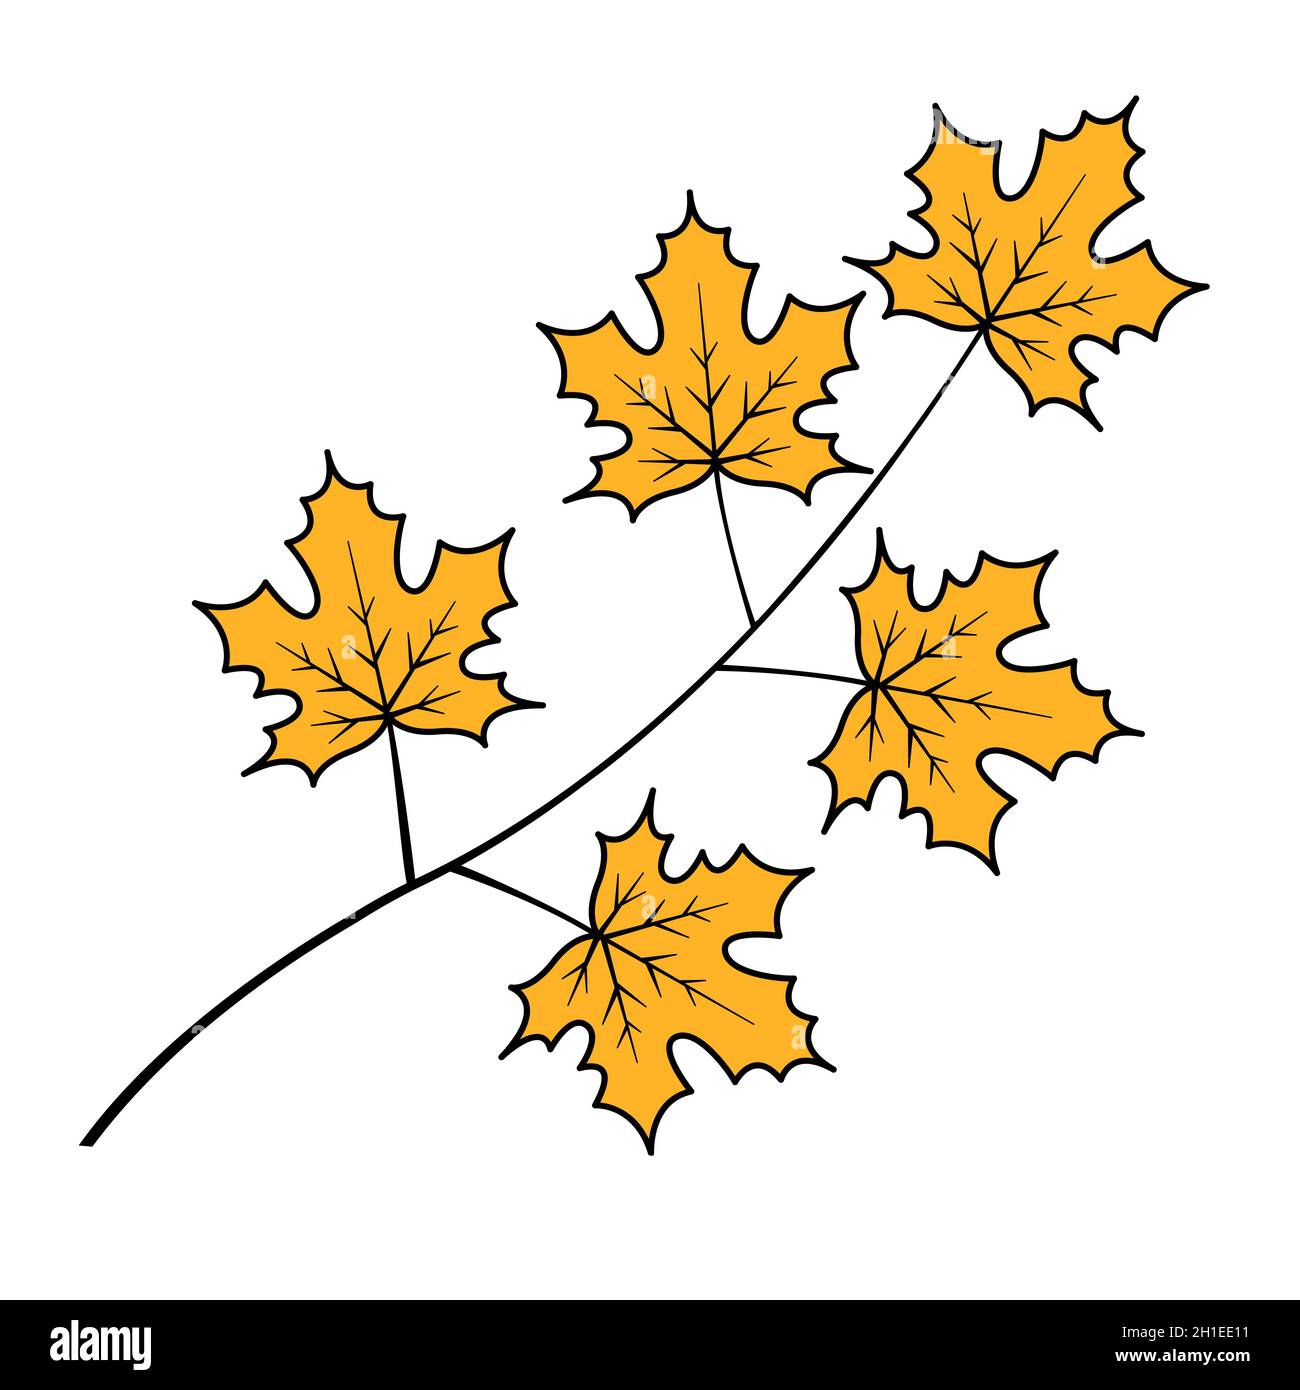 Fall autumn season leaves sketch outline Vector Image